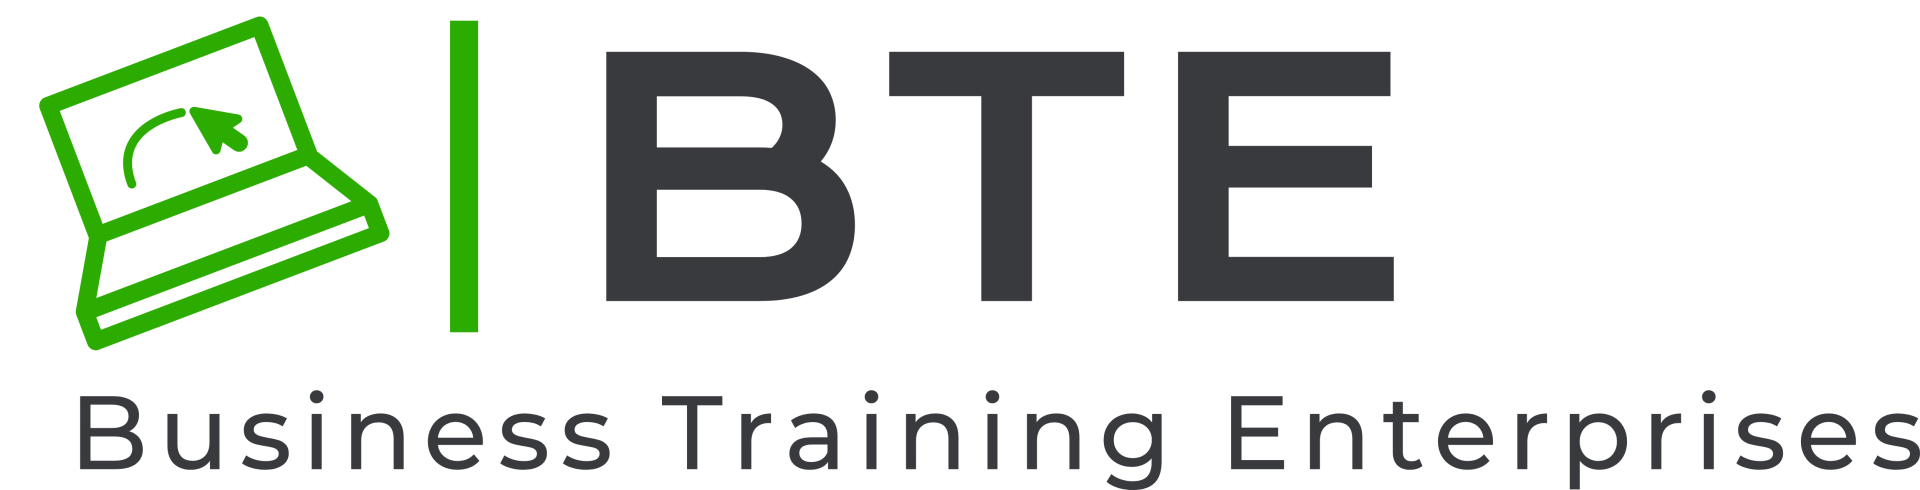 Business Training Enterprises Logo